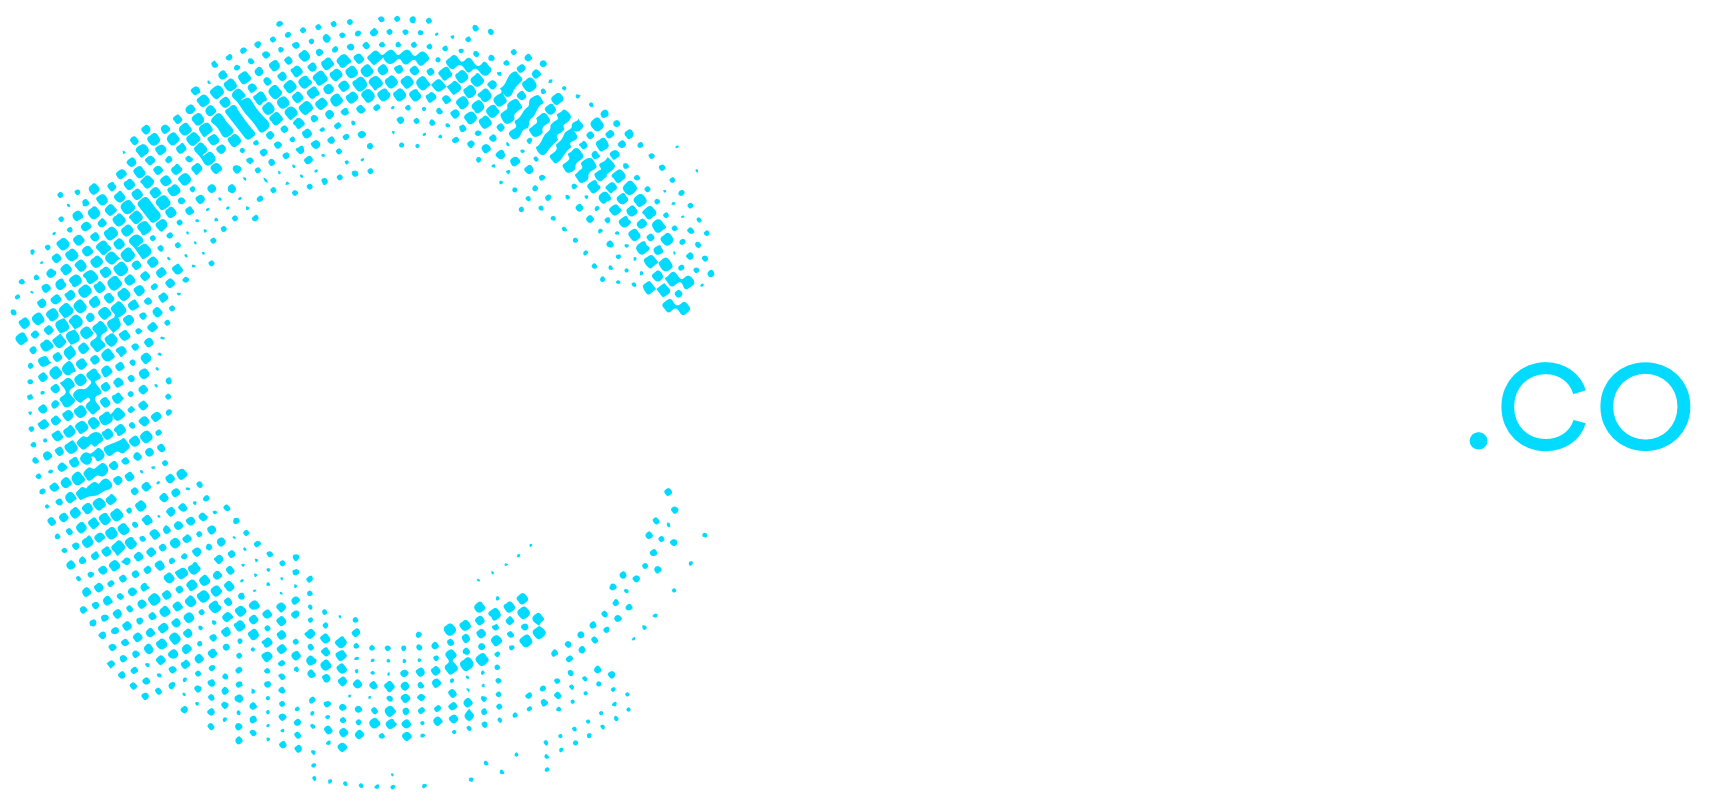 Telerradiologia